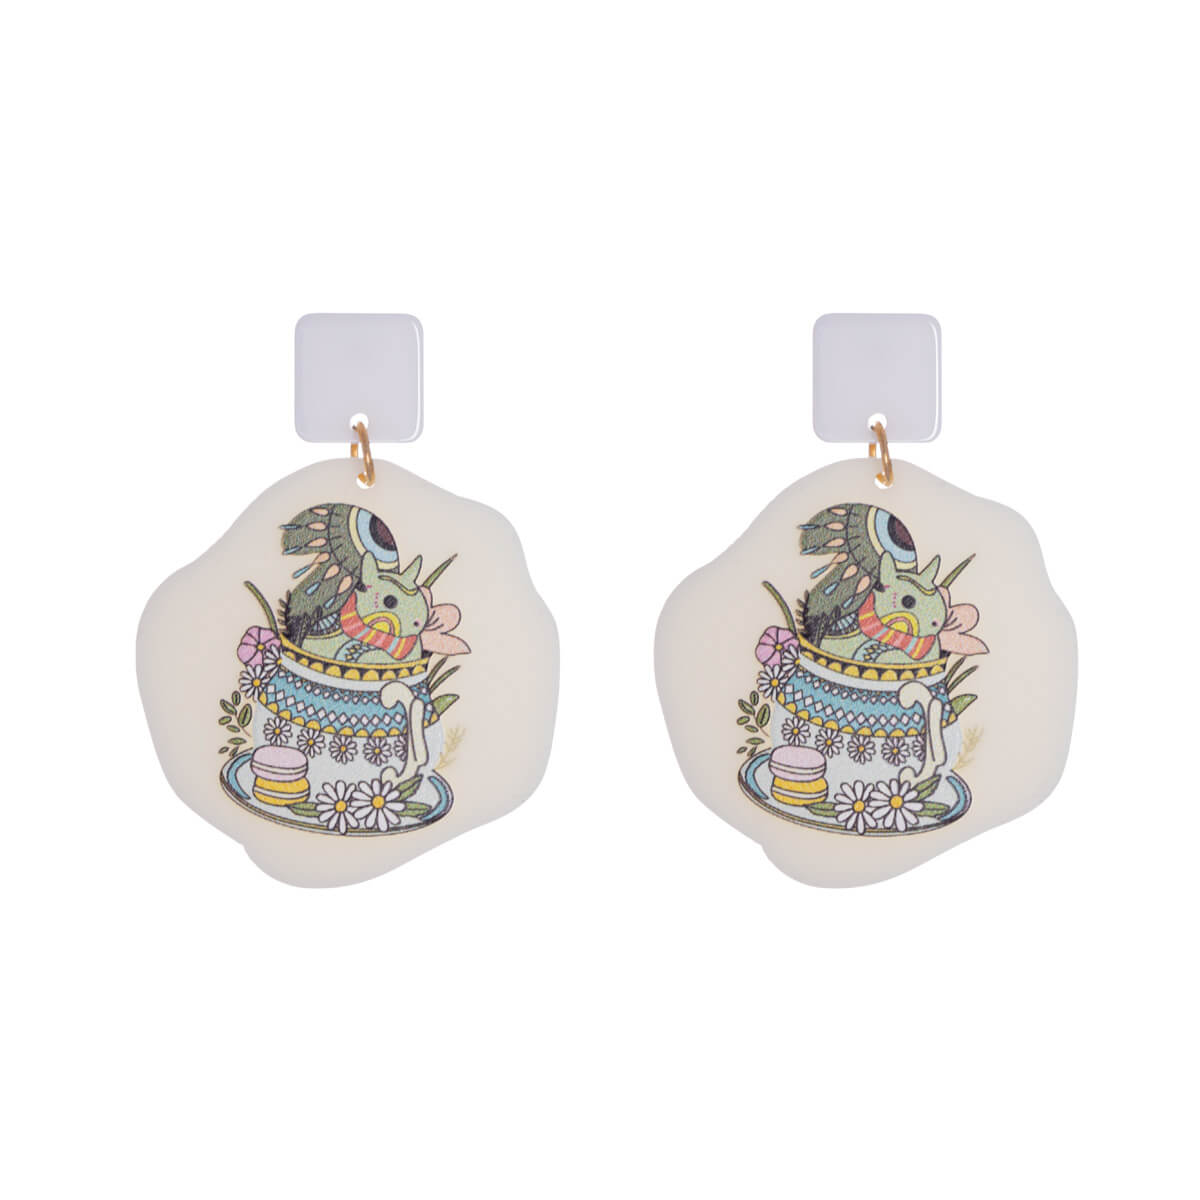 Textured teapot earrings